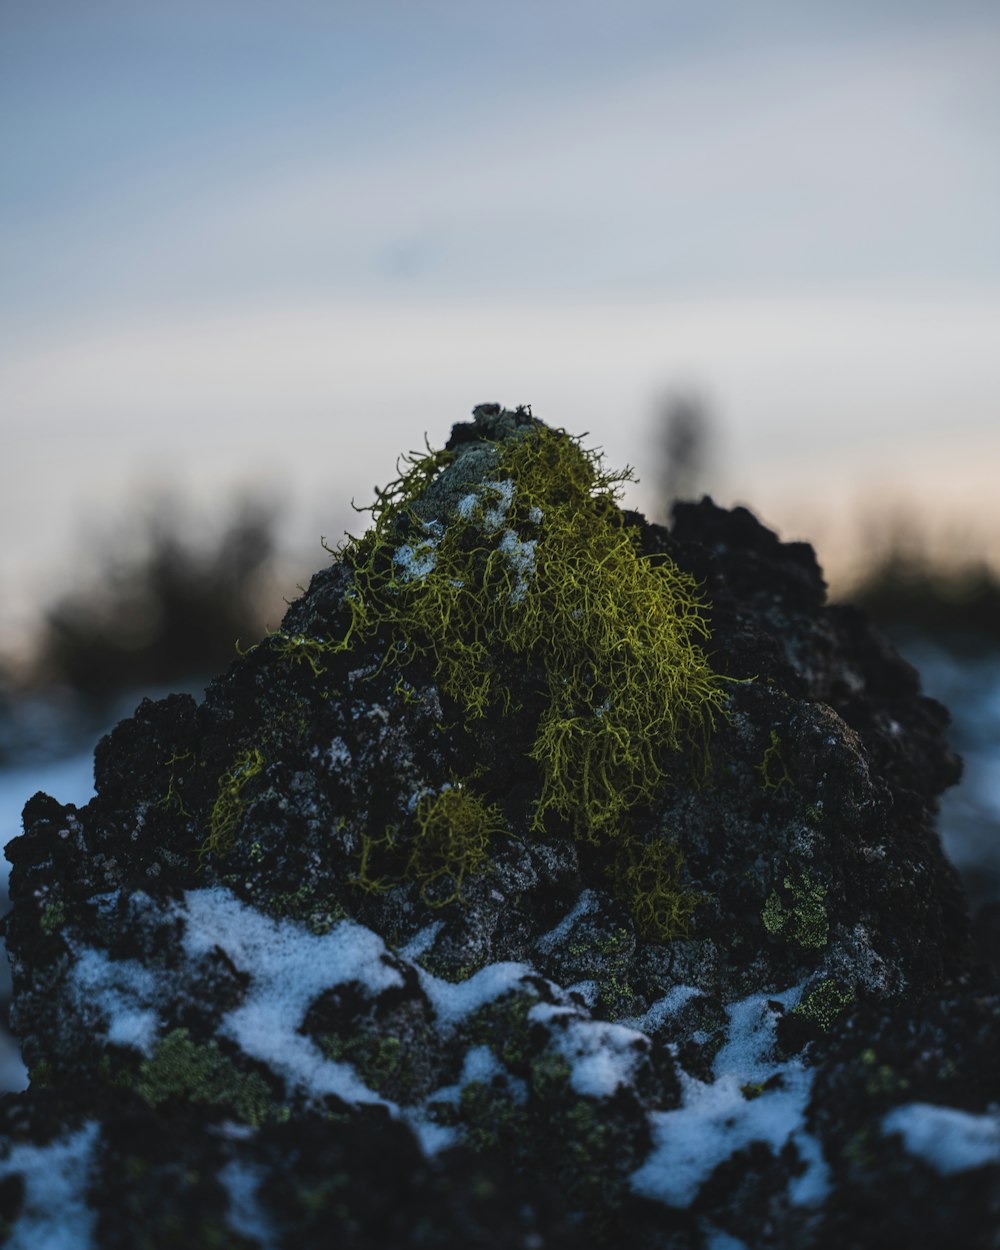 green moss on black rock